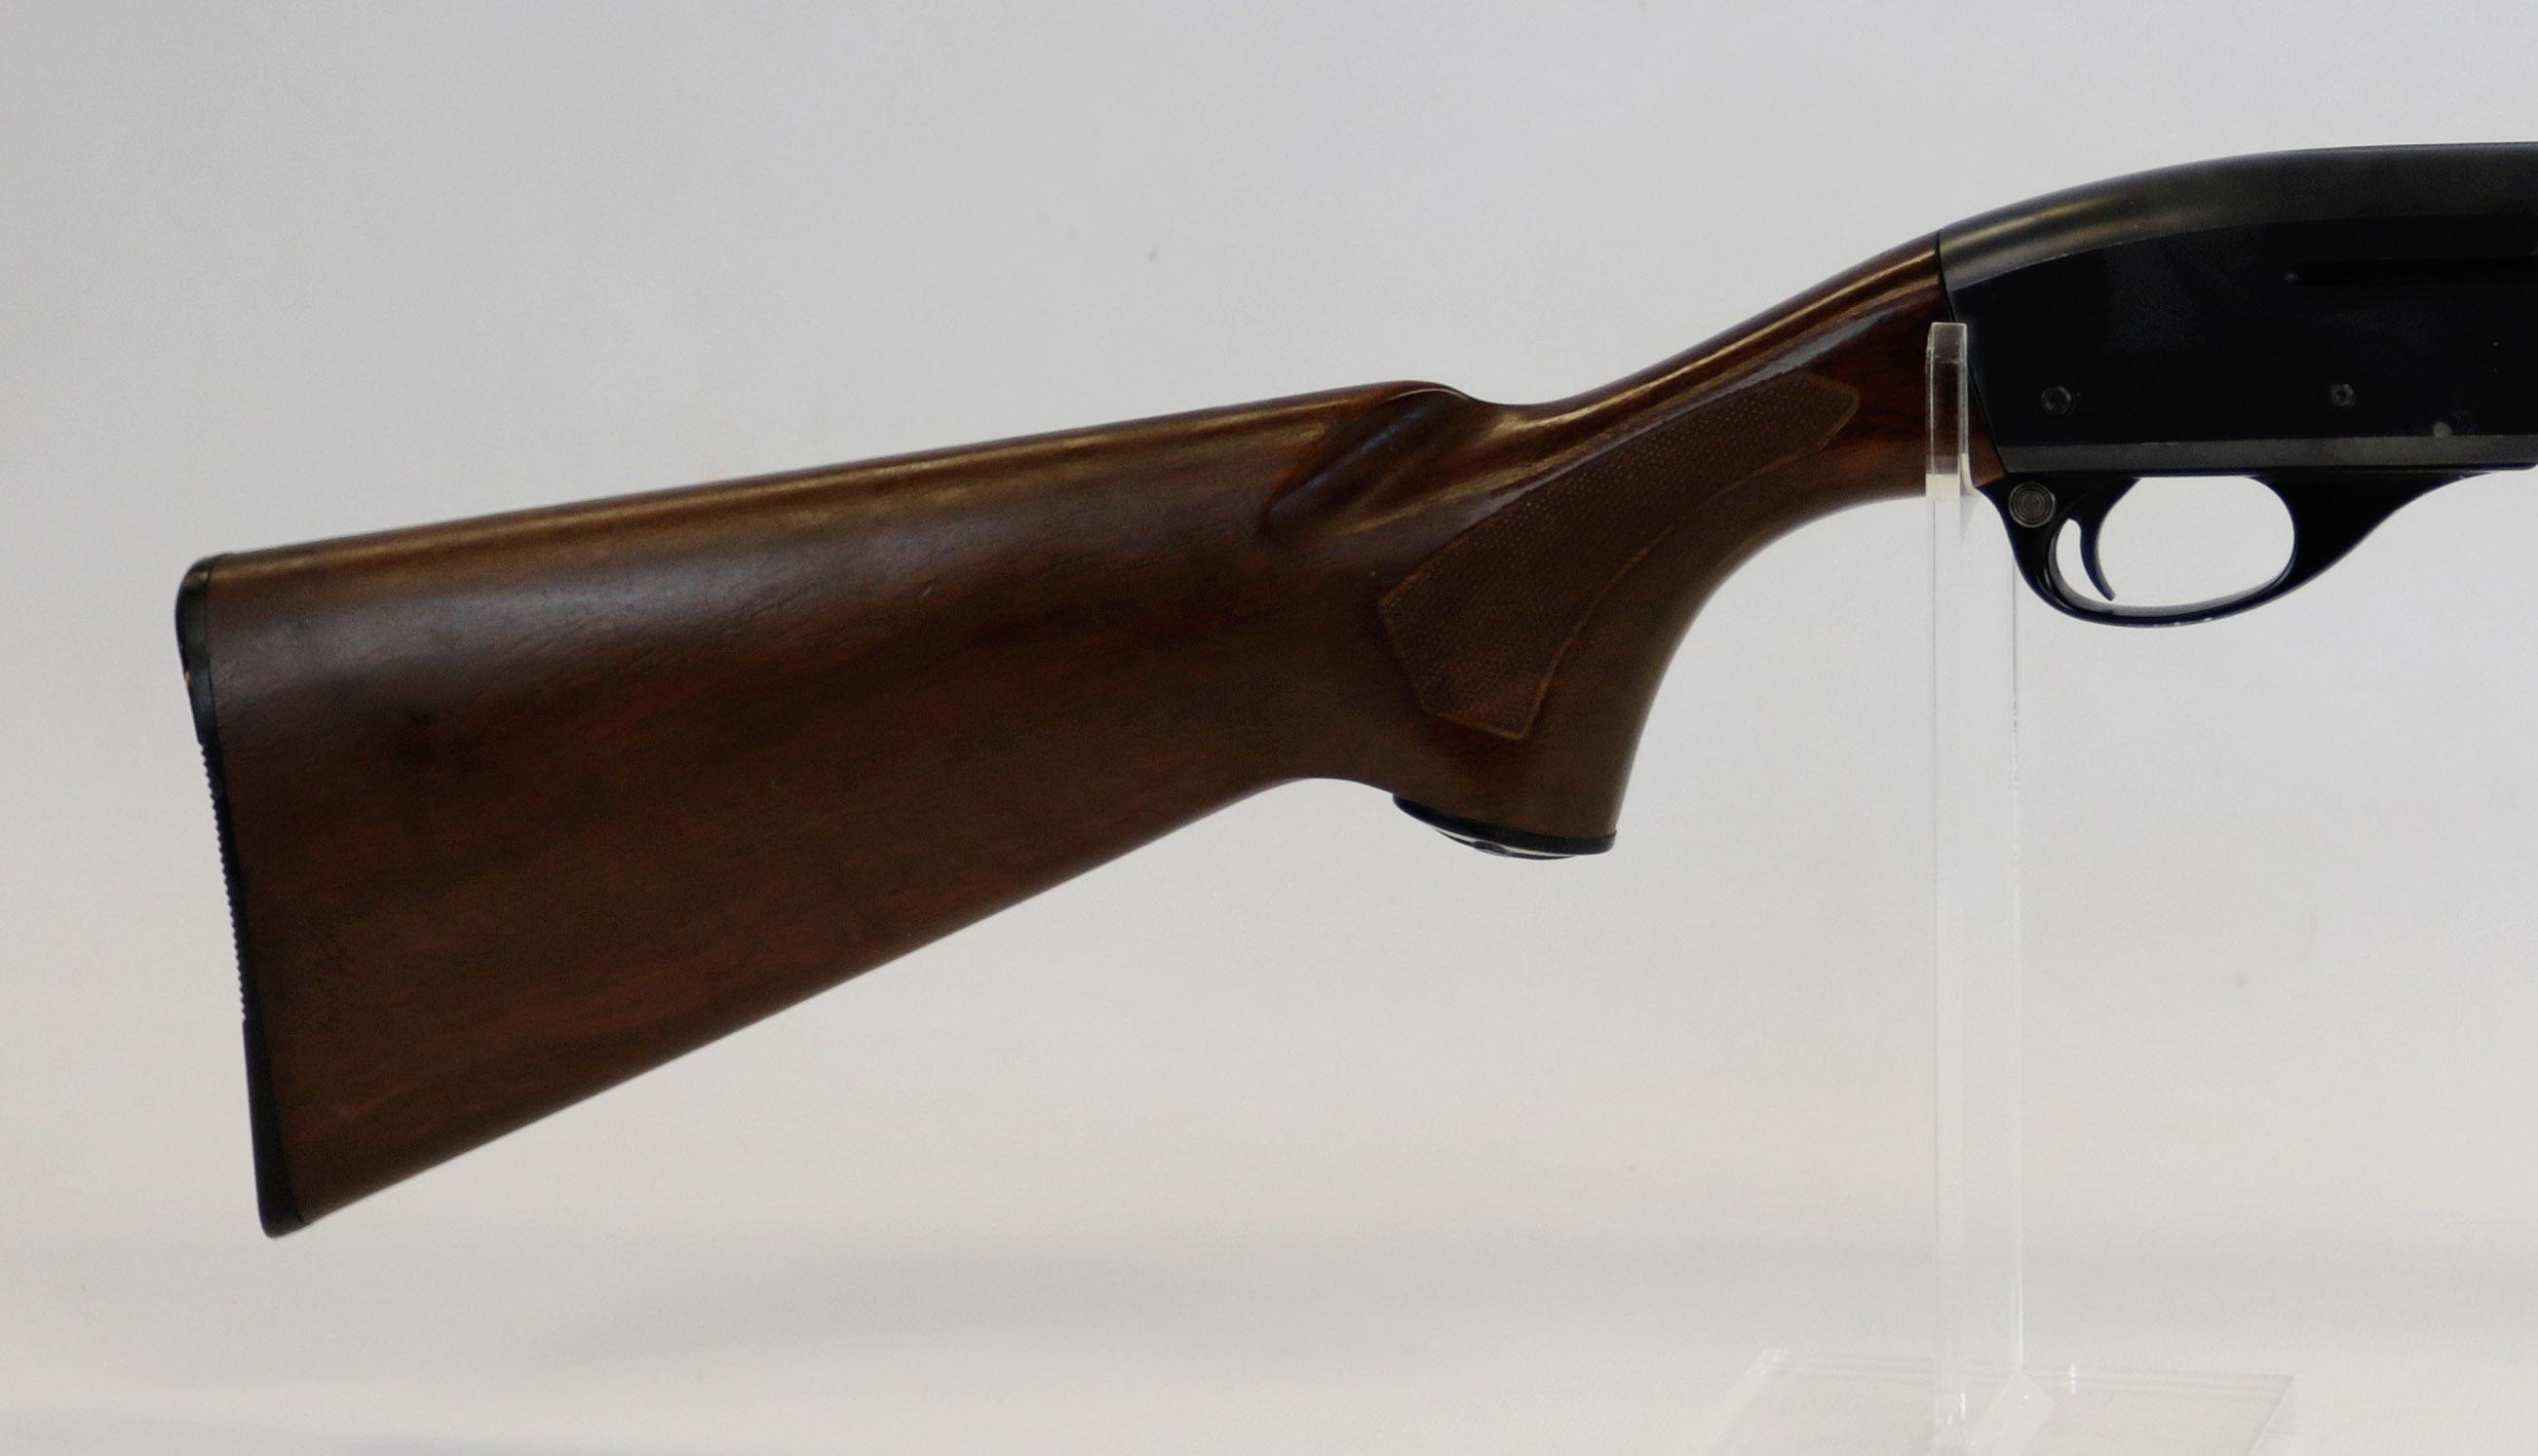 Remington mod 11-48 410ga semi-auto shotgun